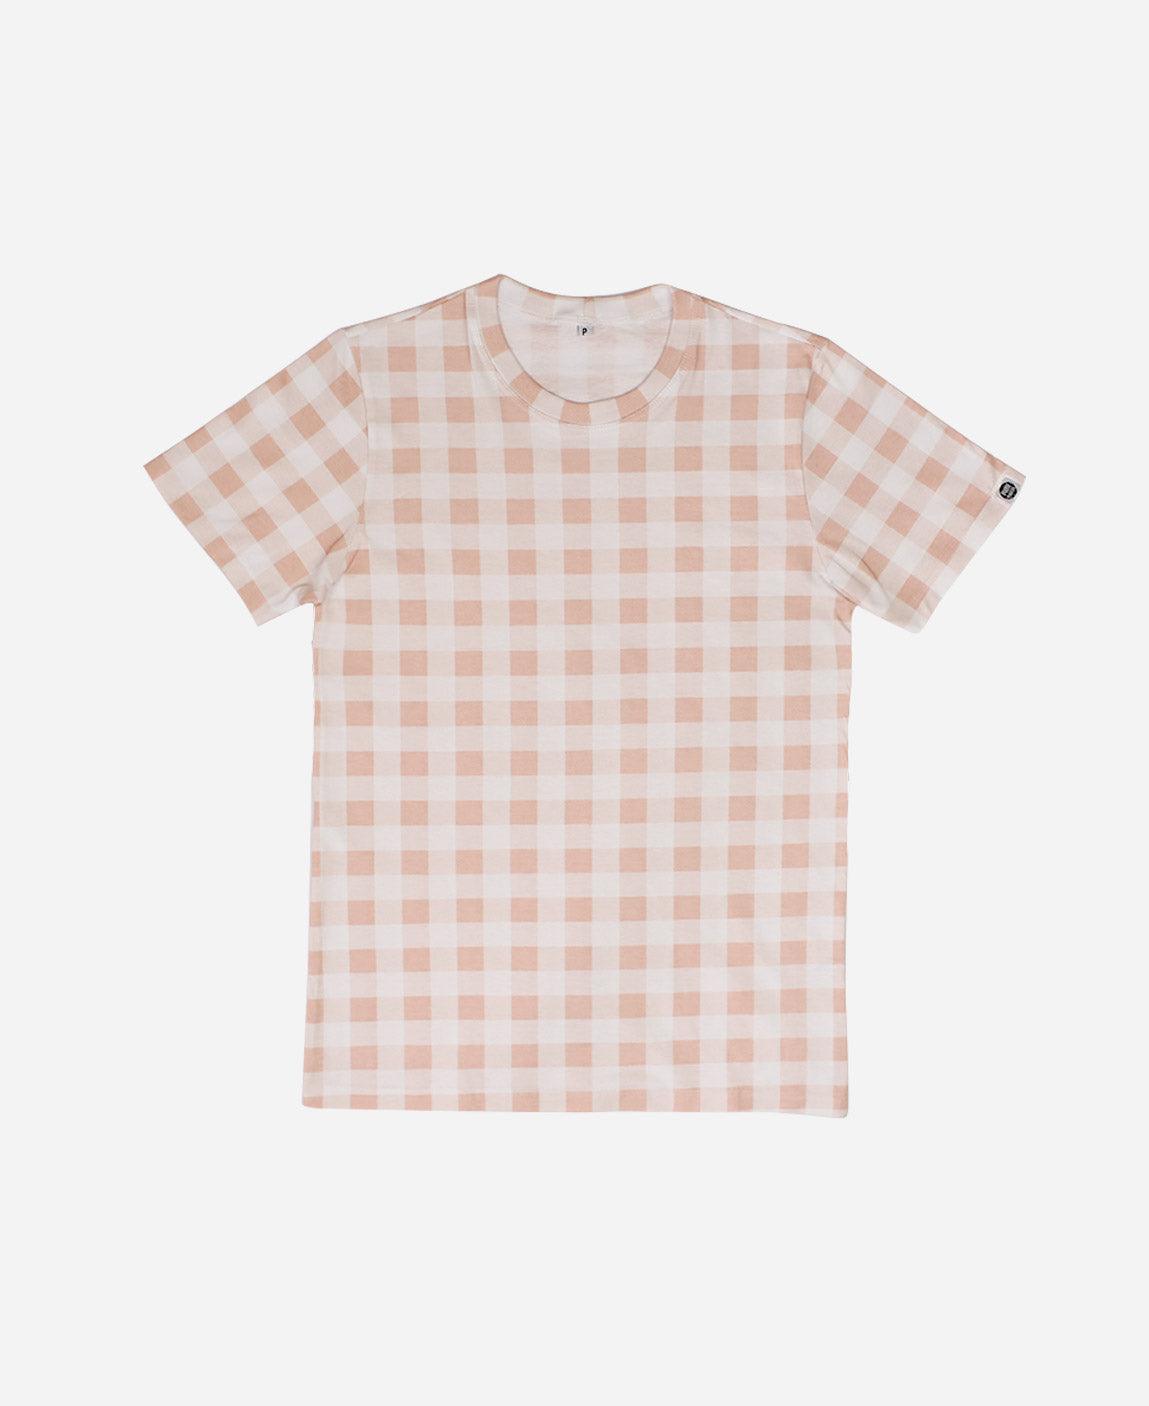 Camiseta Adulto Unissex Vichy Rose - MiniMalista Baby - b2b, Meia Estação, Menina, outlet -bebê-minimalista-estiloso